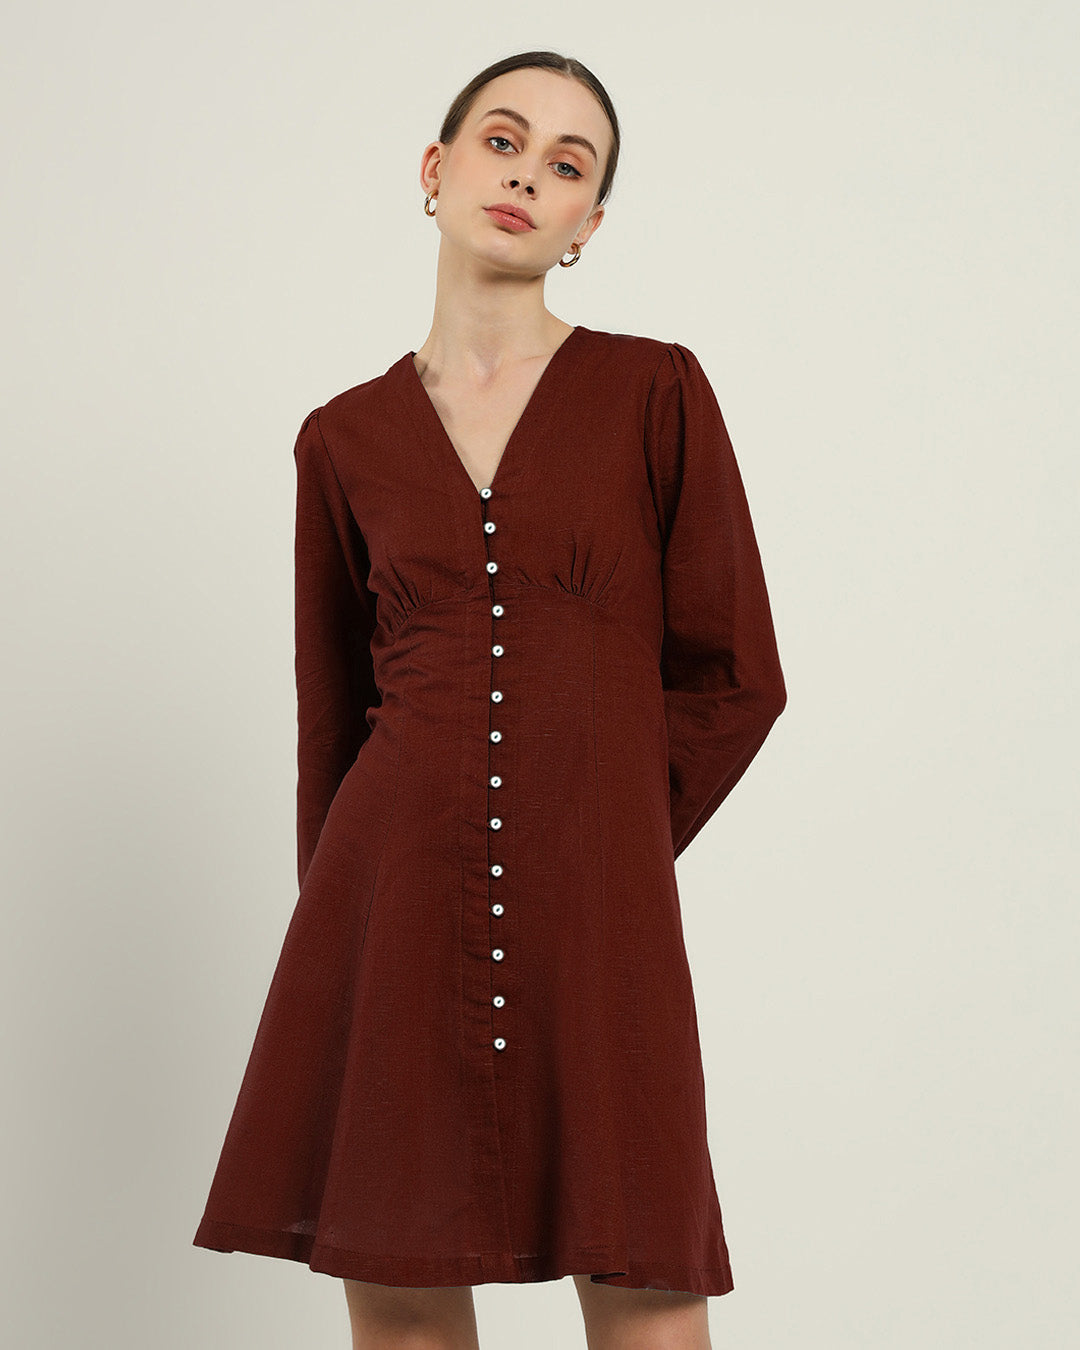 The Dafni Rouge Cotton Dress